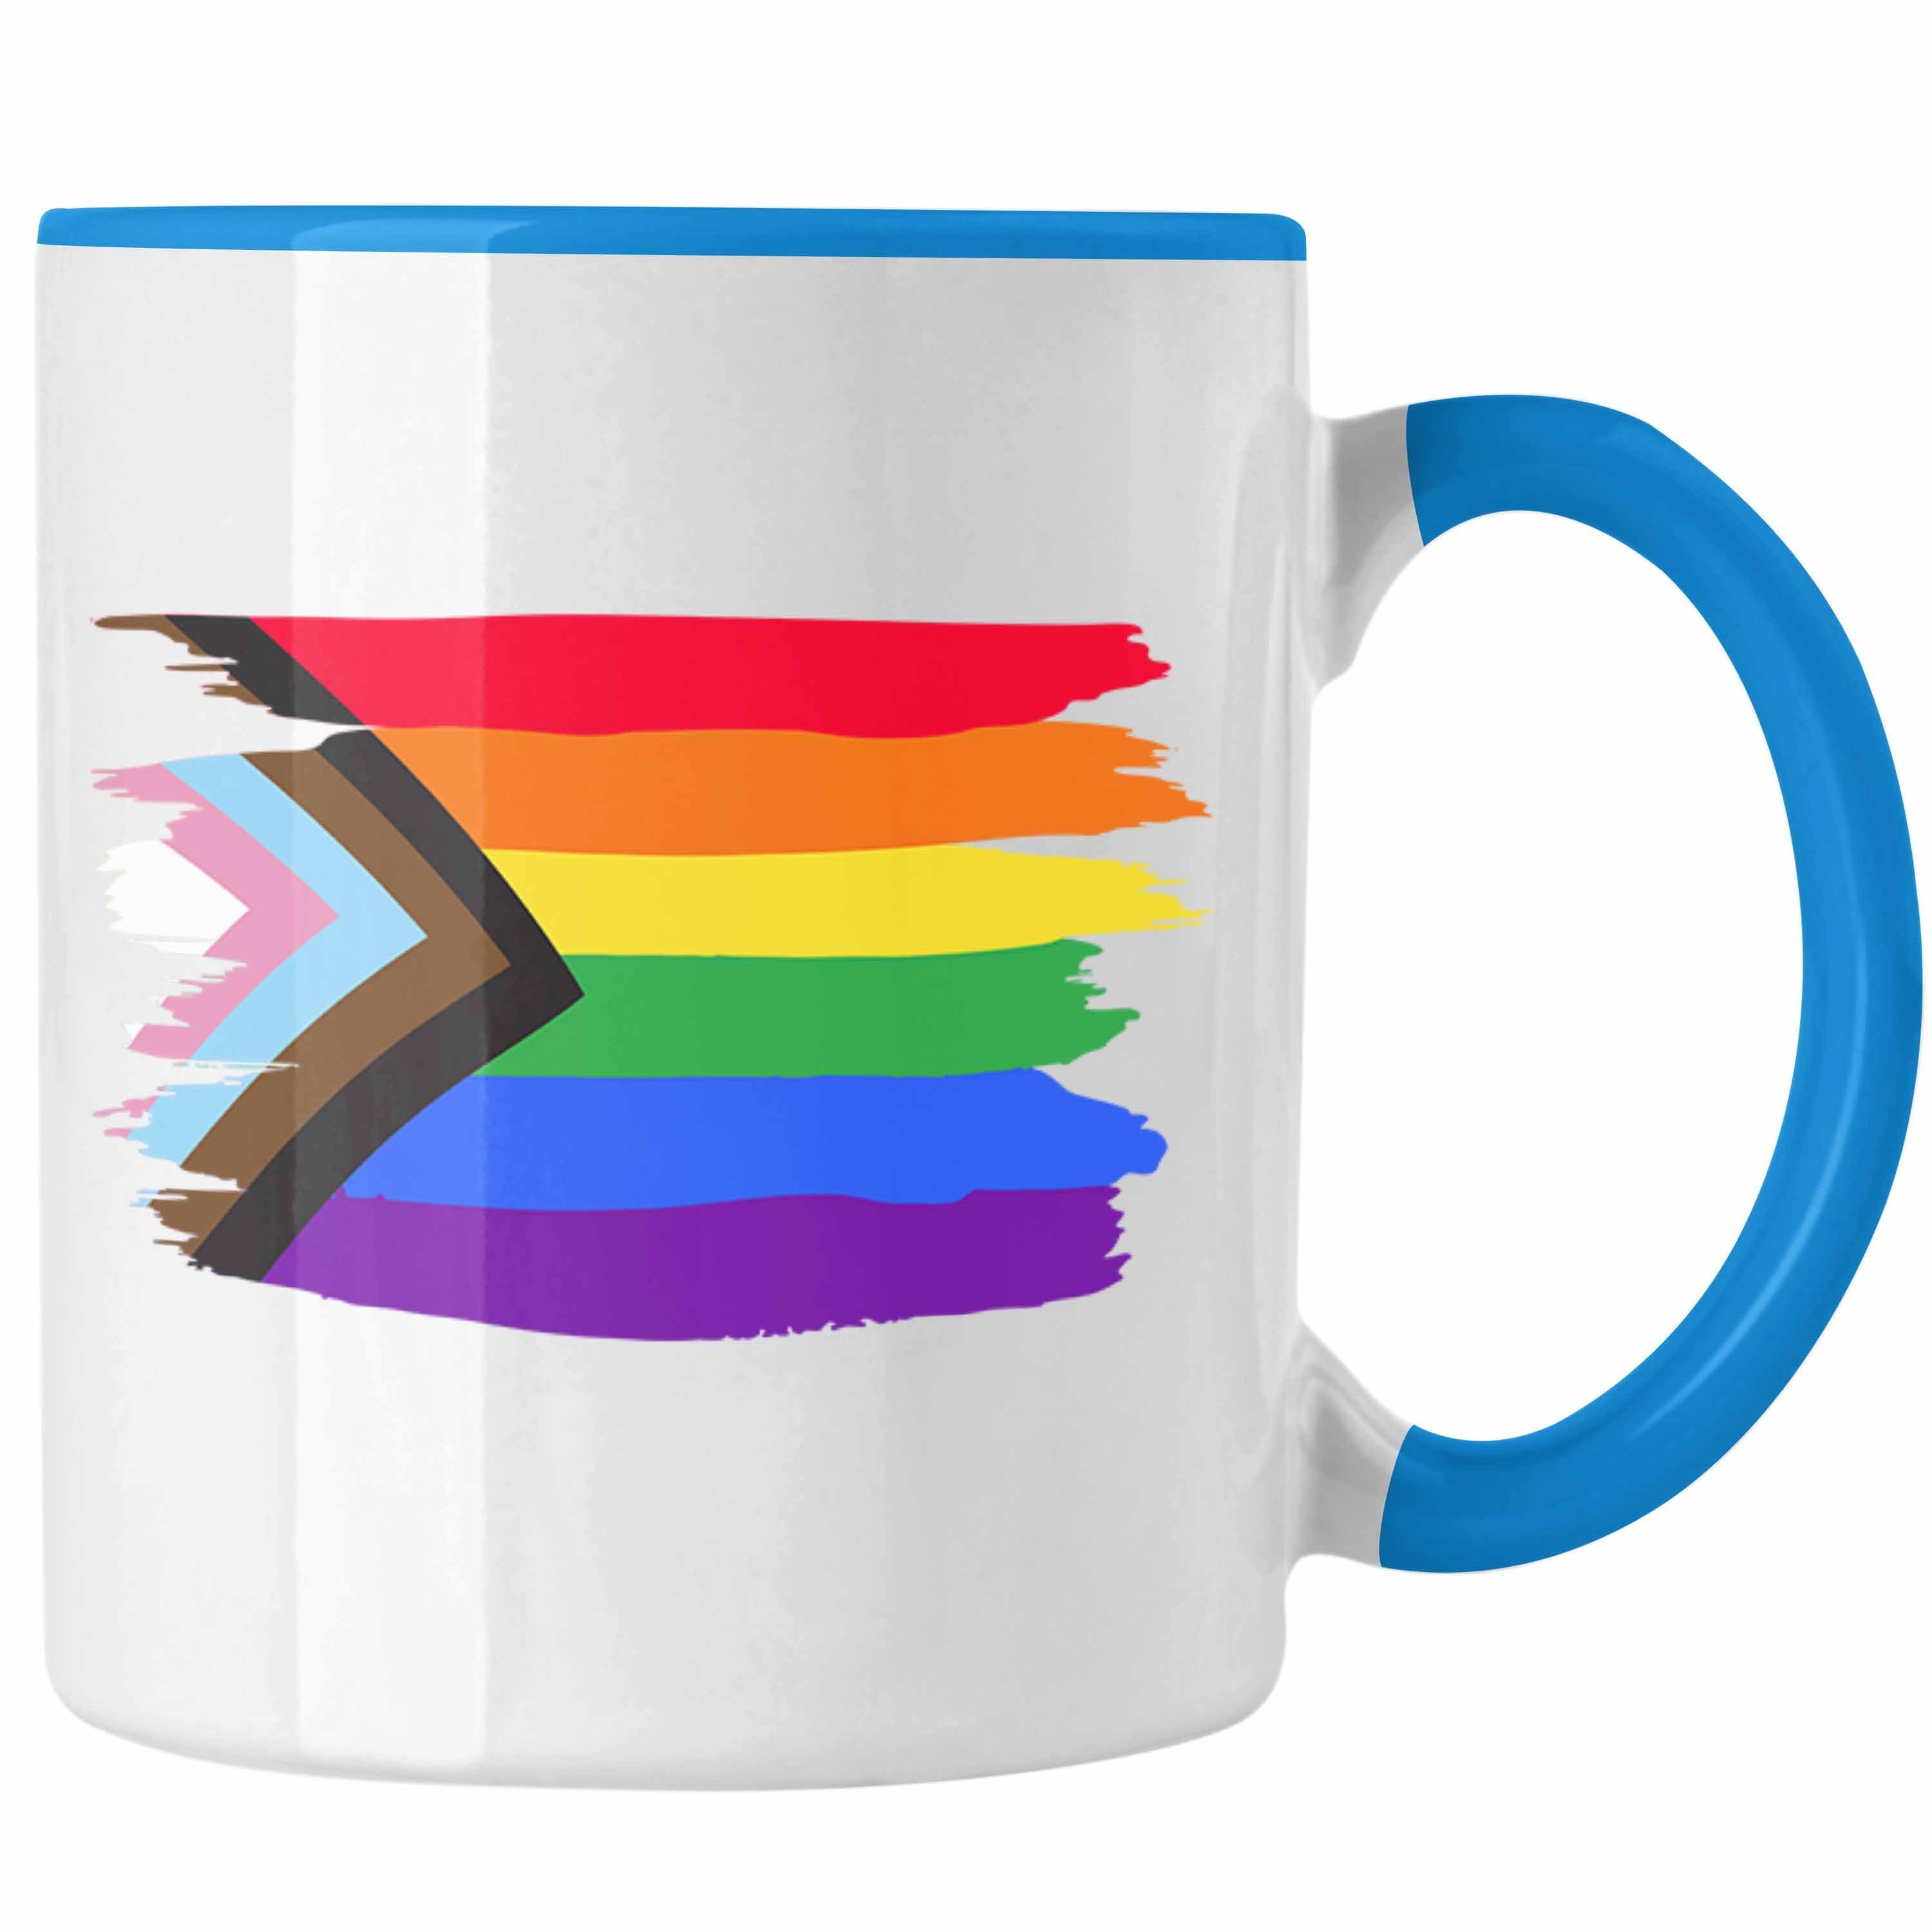 Trendation Tasse Flagge Lesben Transgender - Pride Grafik Geschenk Tasse LGBT Regenbogen Blau Schwule Trendation